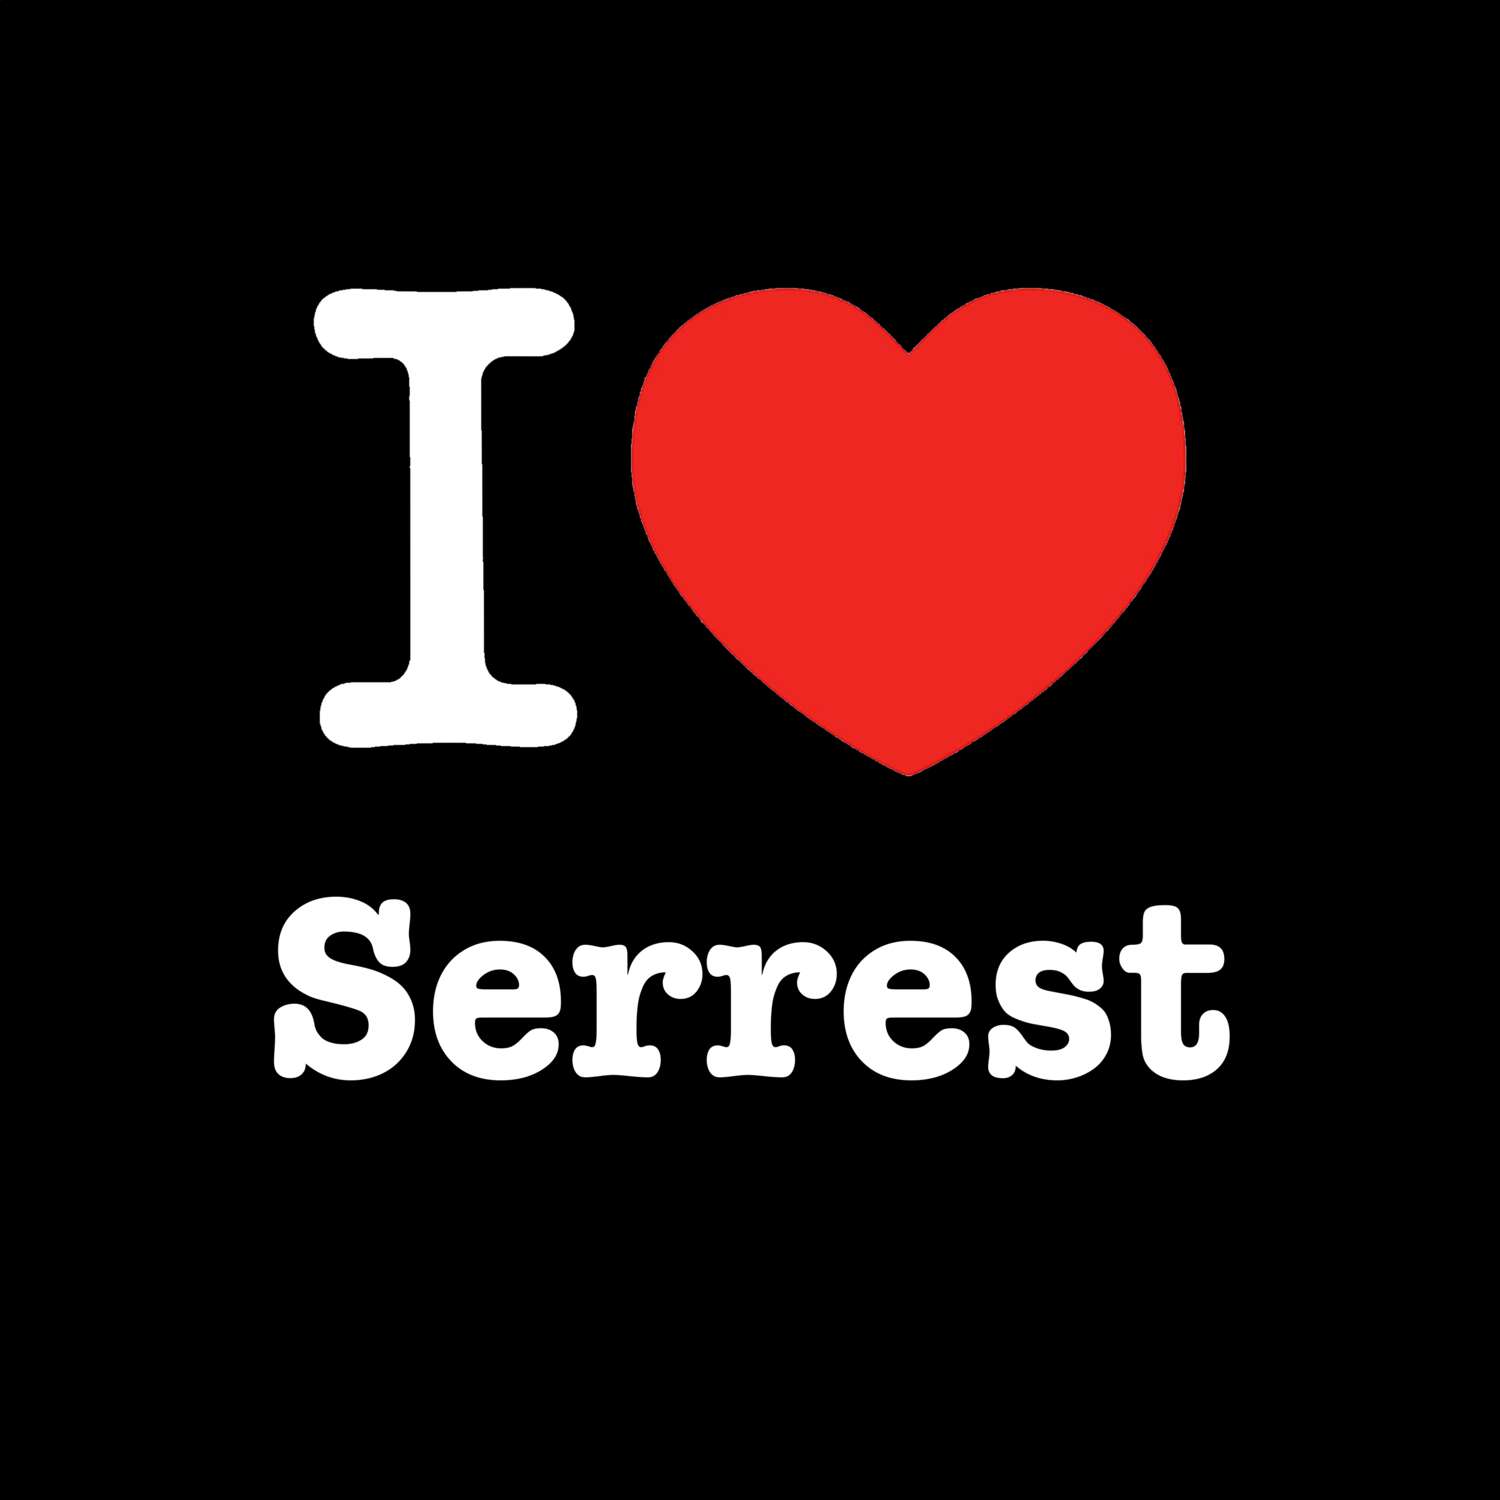 Serrest T-Shirt »I love«